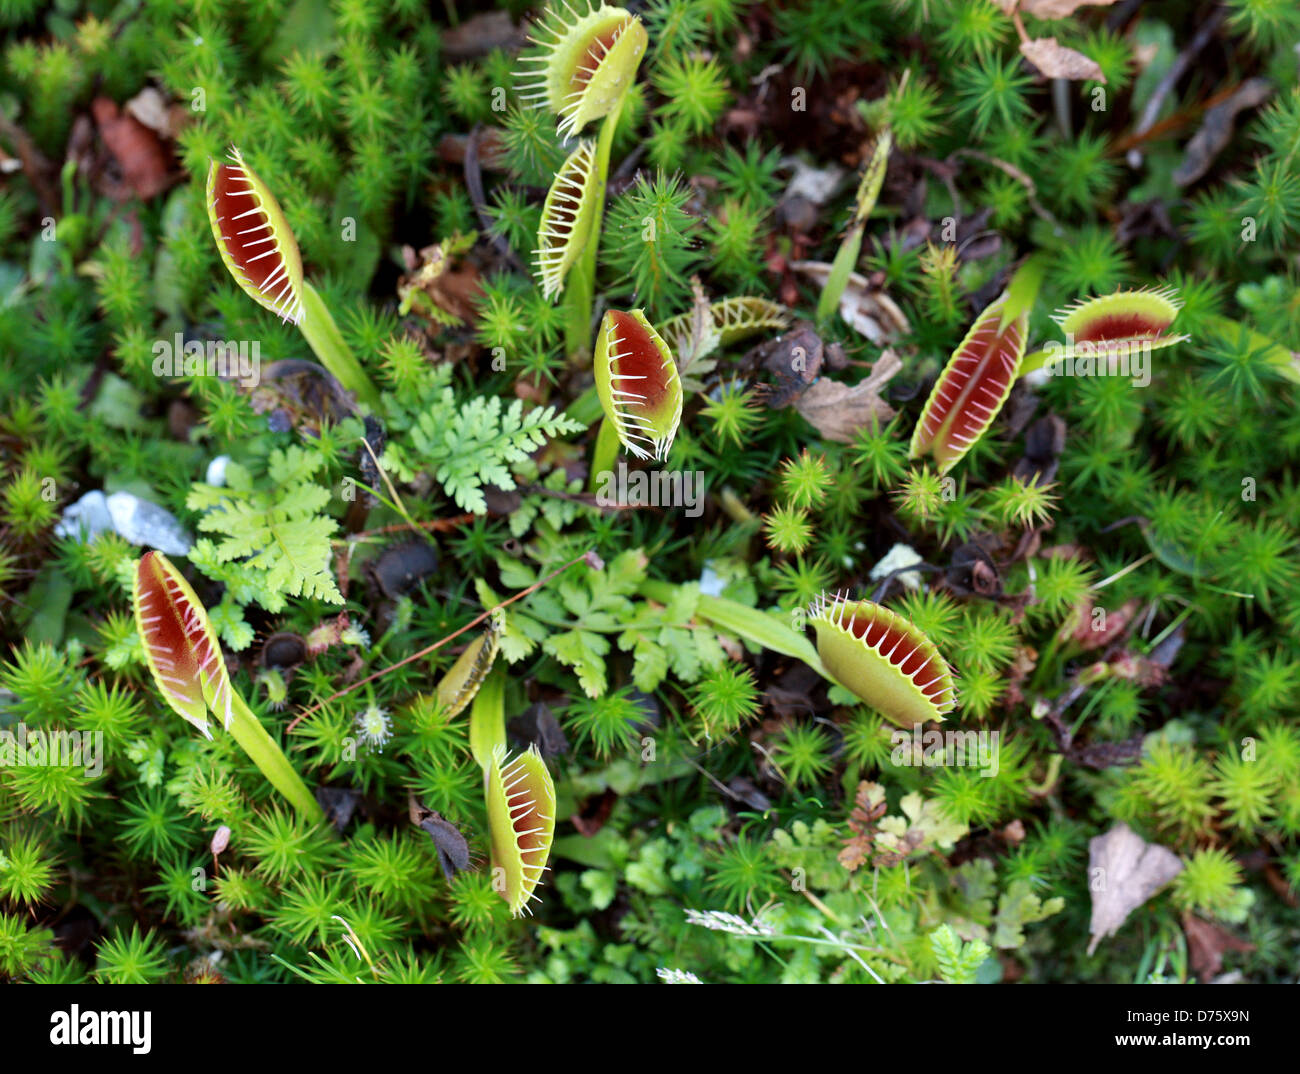 Venus Flytrap, Dionaea muscipula, Droseraceae. North Carolina, USA, Amérique du Nord. Une plante carnivore. Banque D'Images